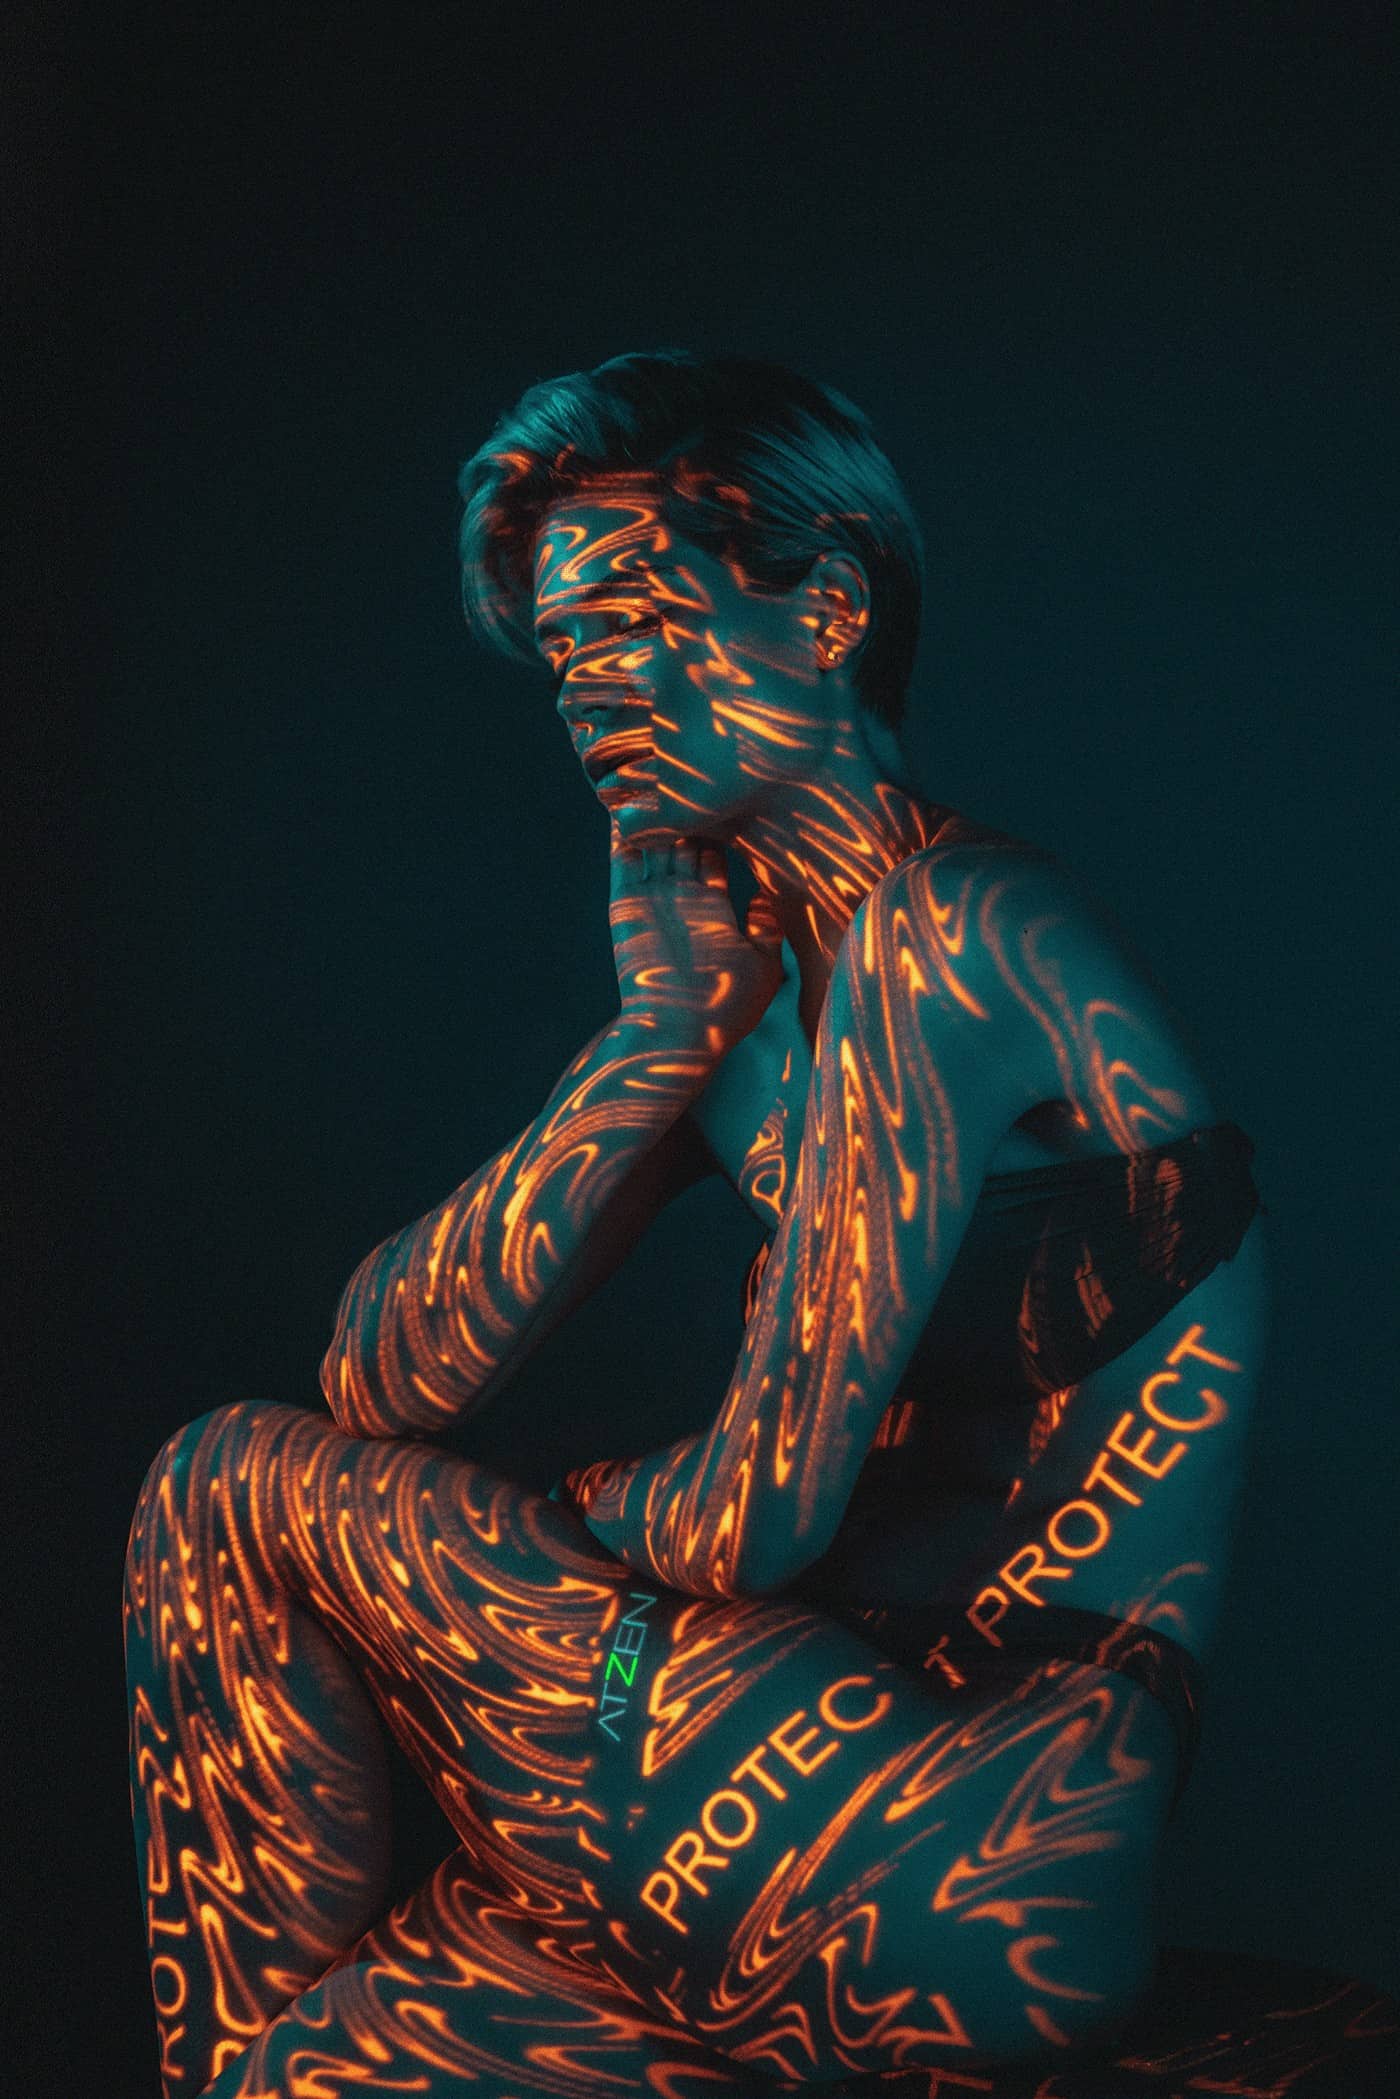 ATZEN Skin Care – 19TONES – Blue Light Projection Photography